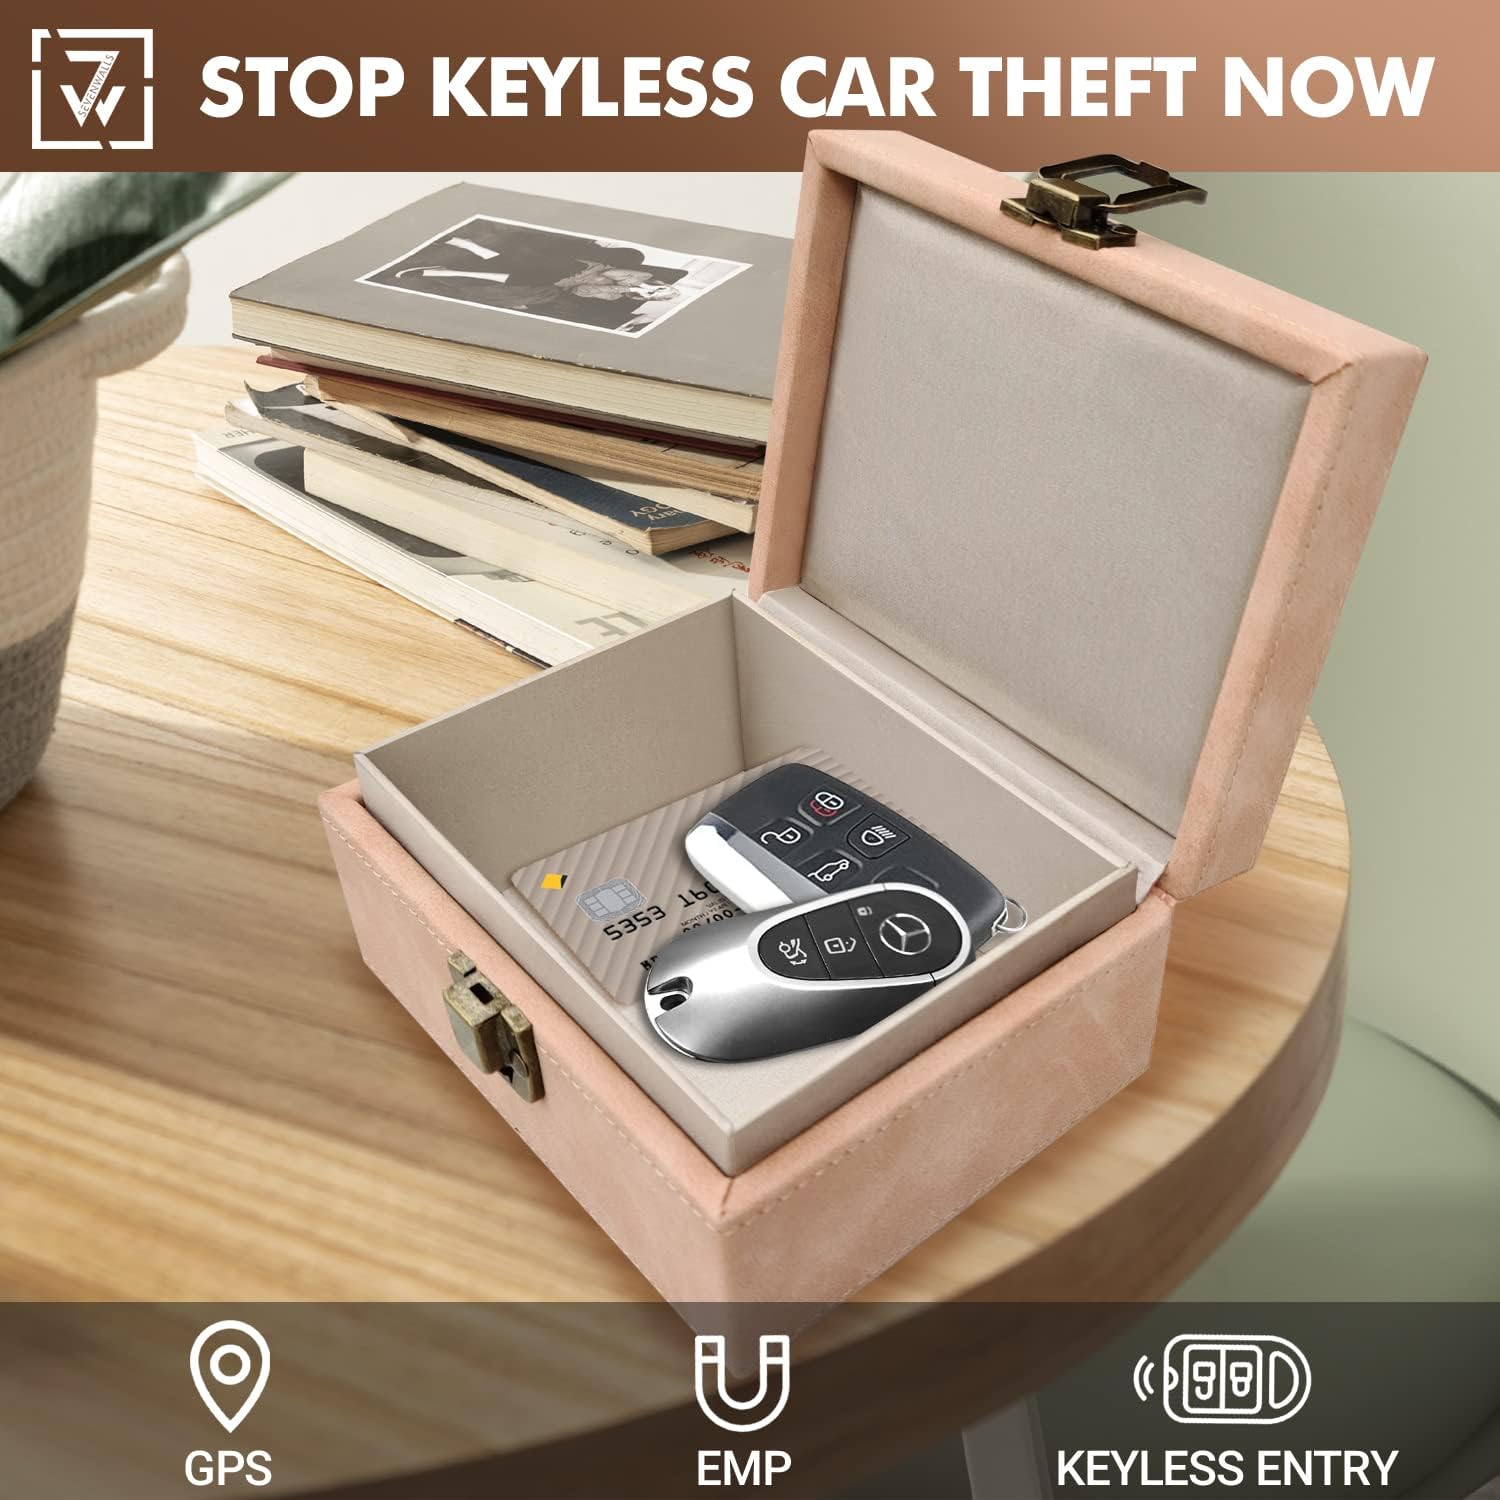 Buy Sevenwalls Faraday Box for Car Keys Protection – SEVENWALLS